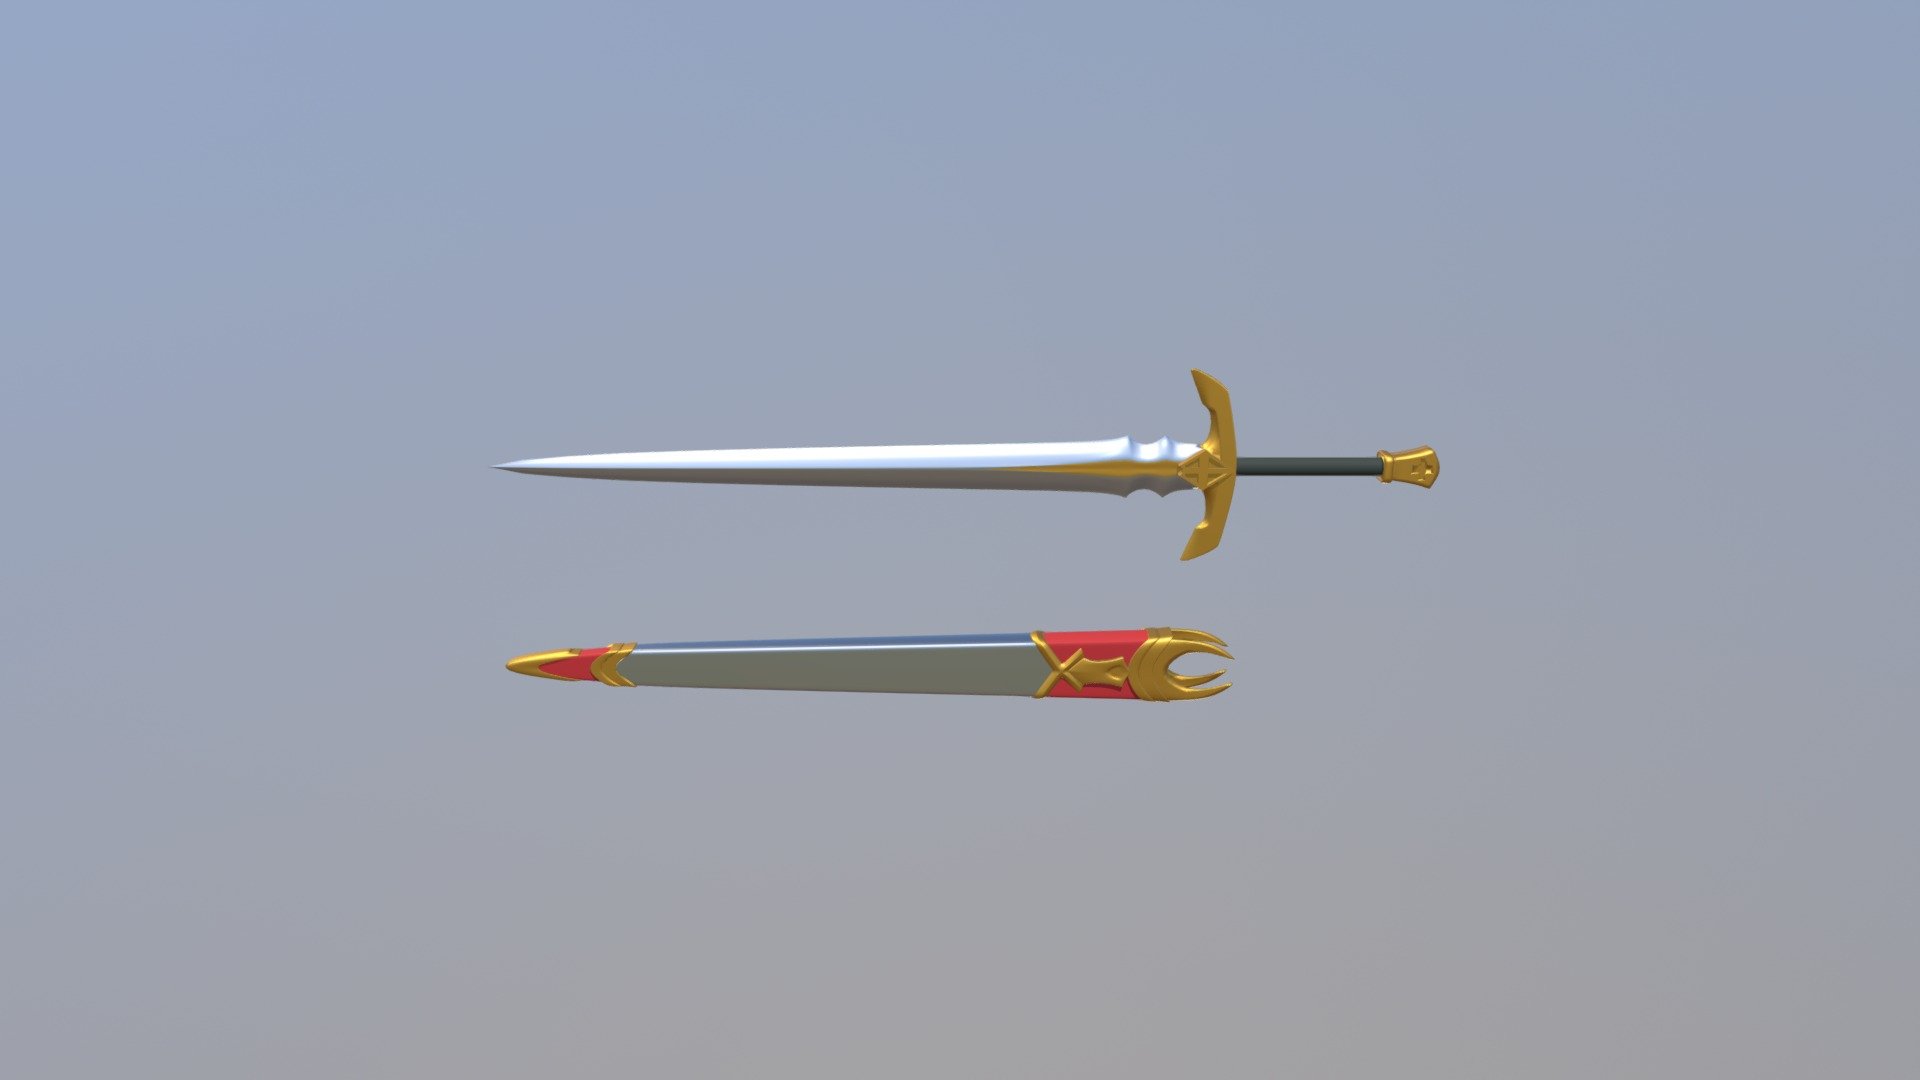 FGO - Astolfo's sword and Scabbard